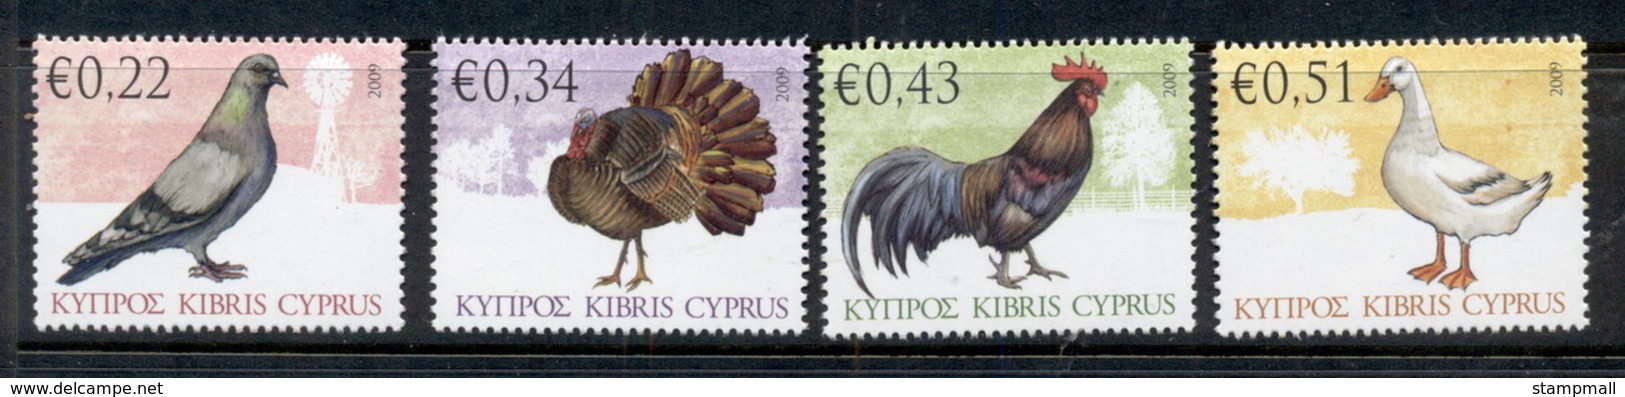 Cyprus 2009 Birds MUH - Unused Stamps